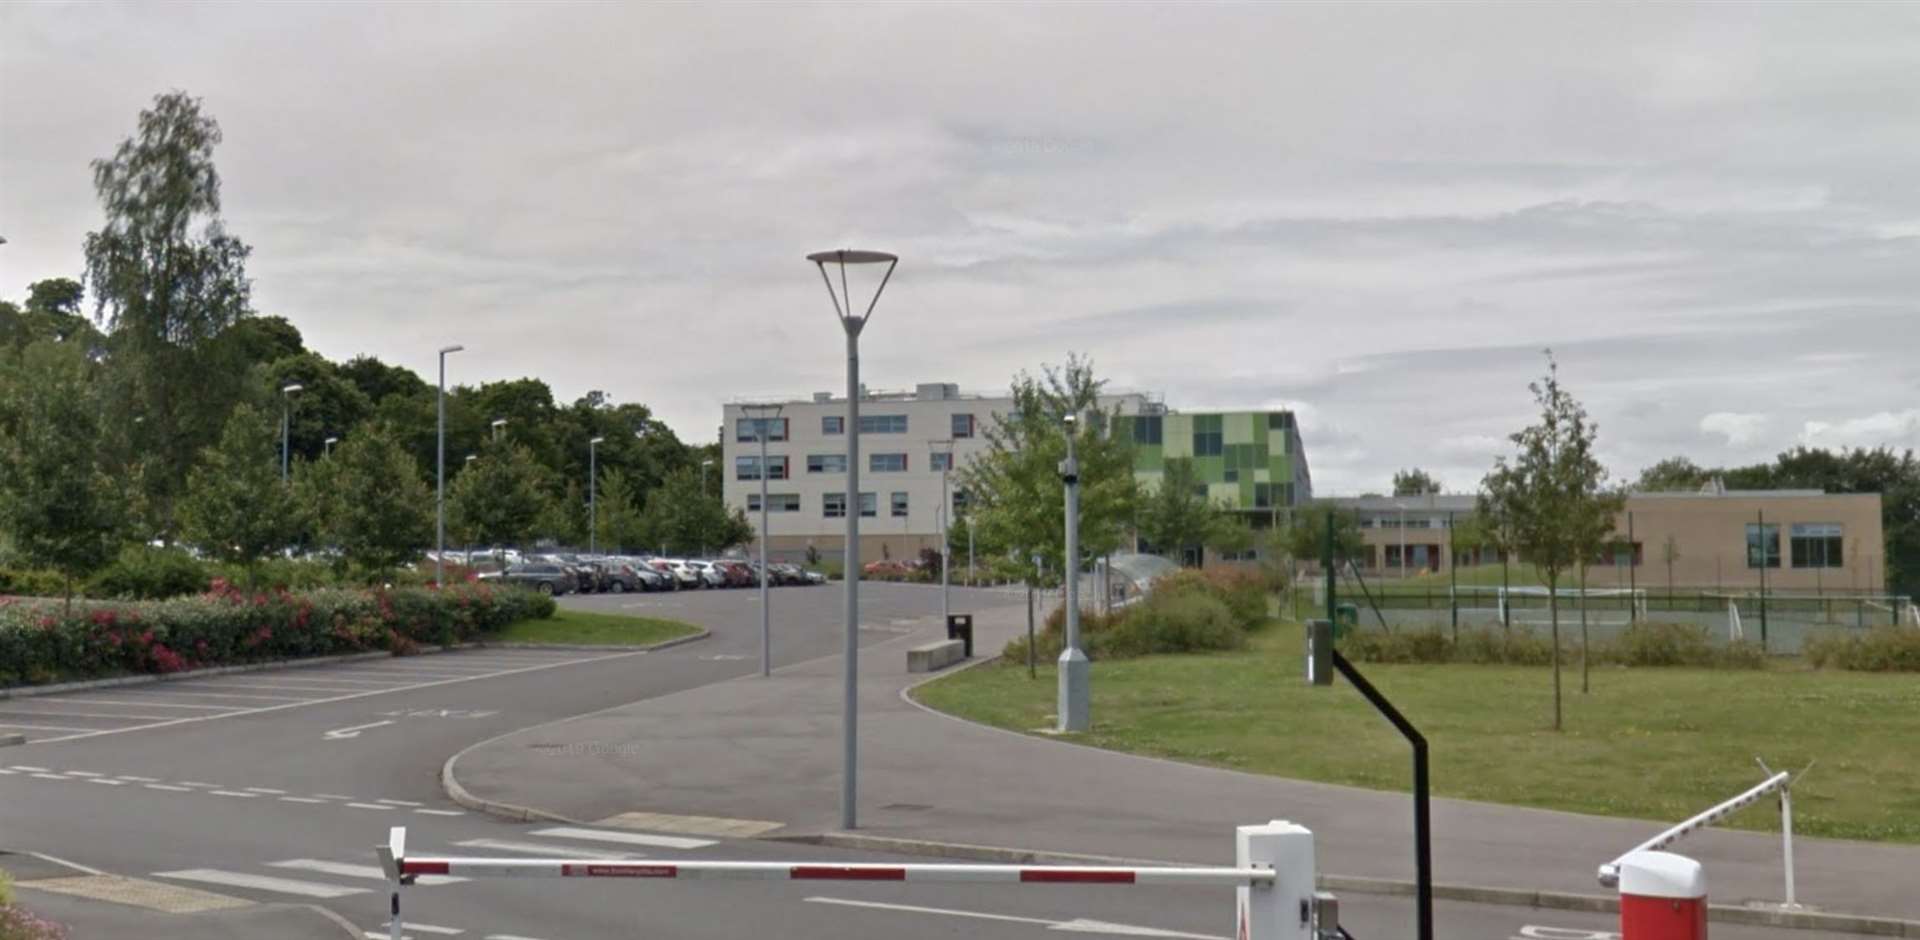 Cornwallis Academy, Loose, Maidstone. Picture: Google Street View